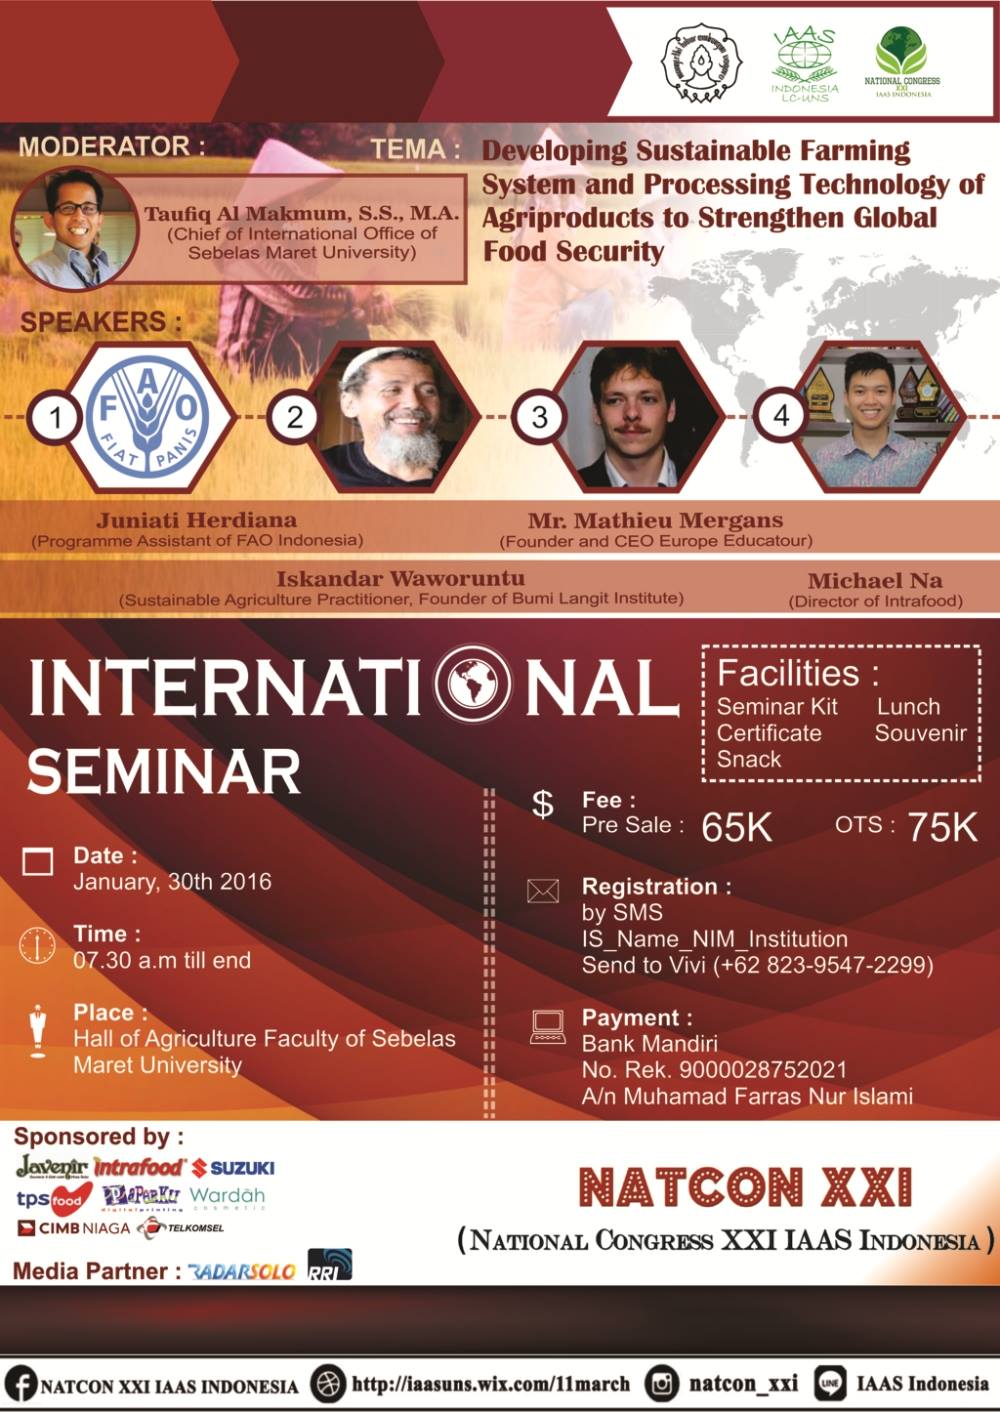 NATCON XXI International Seminar